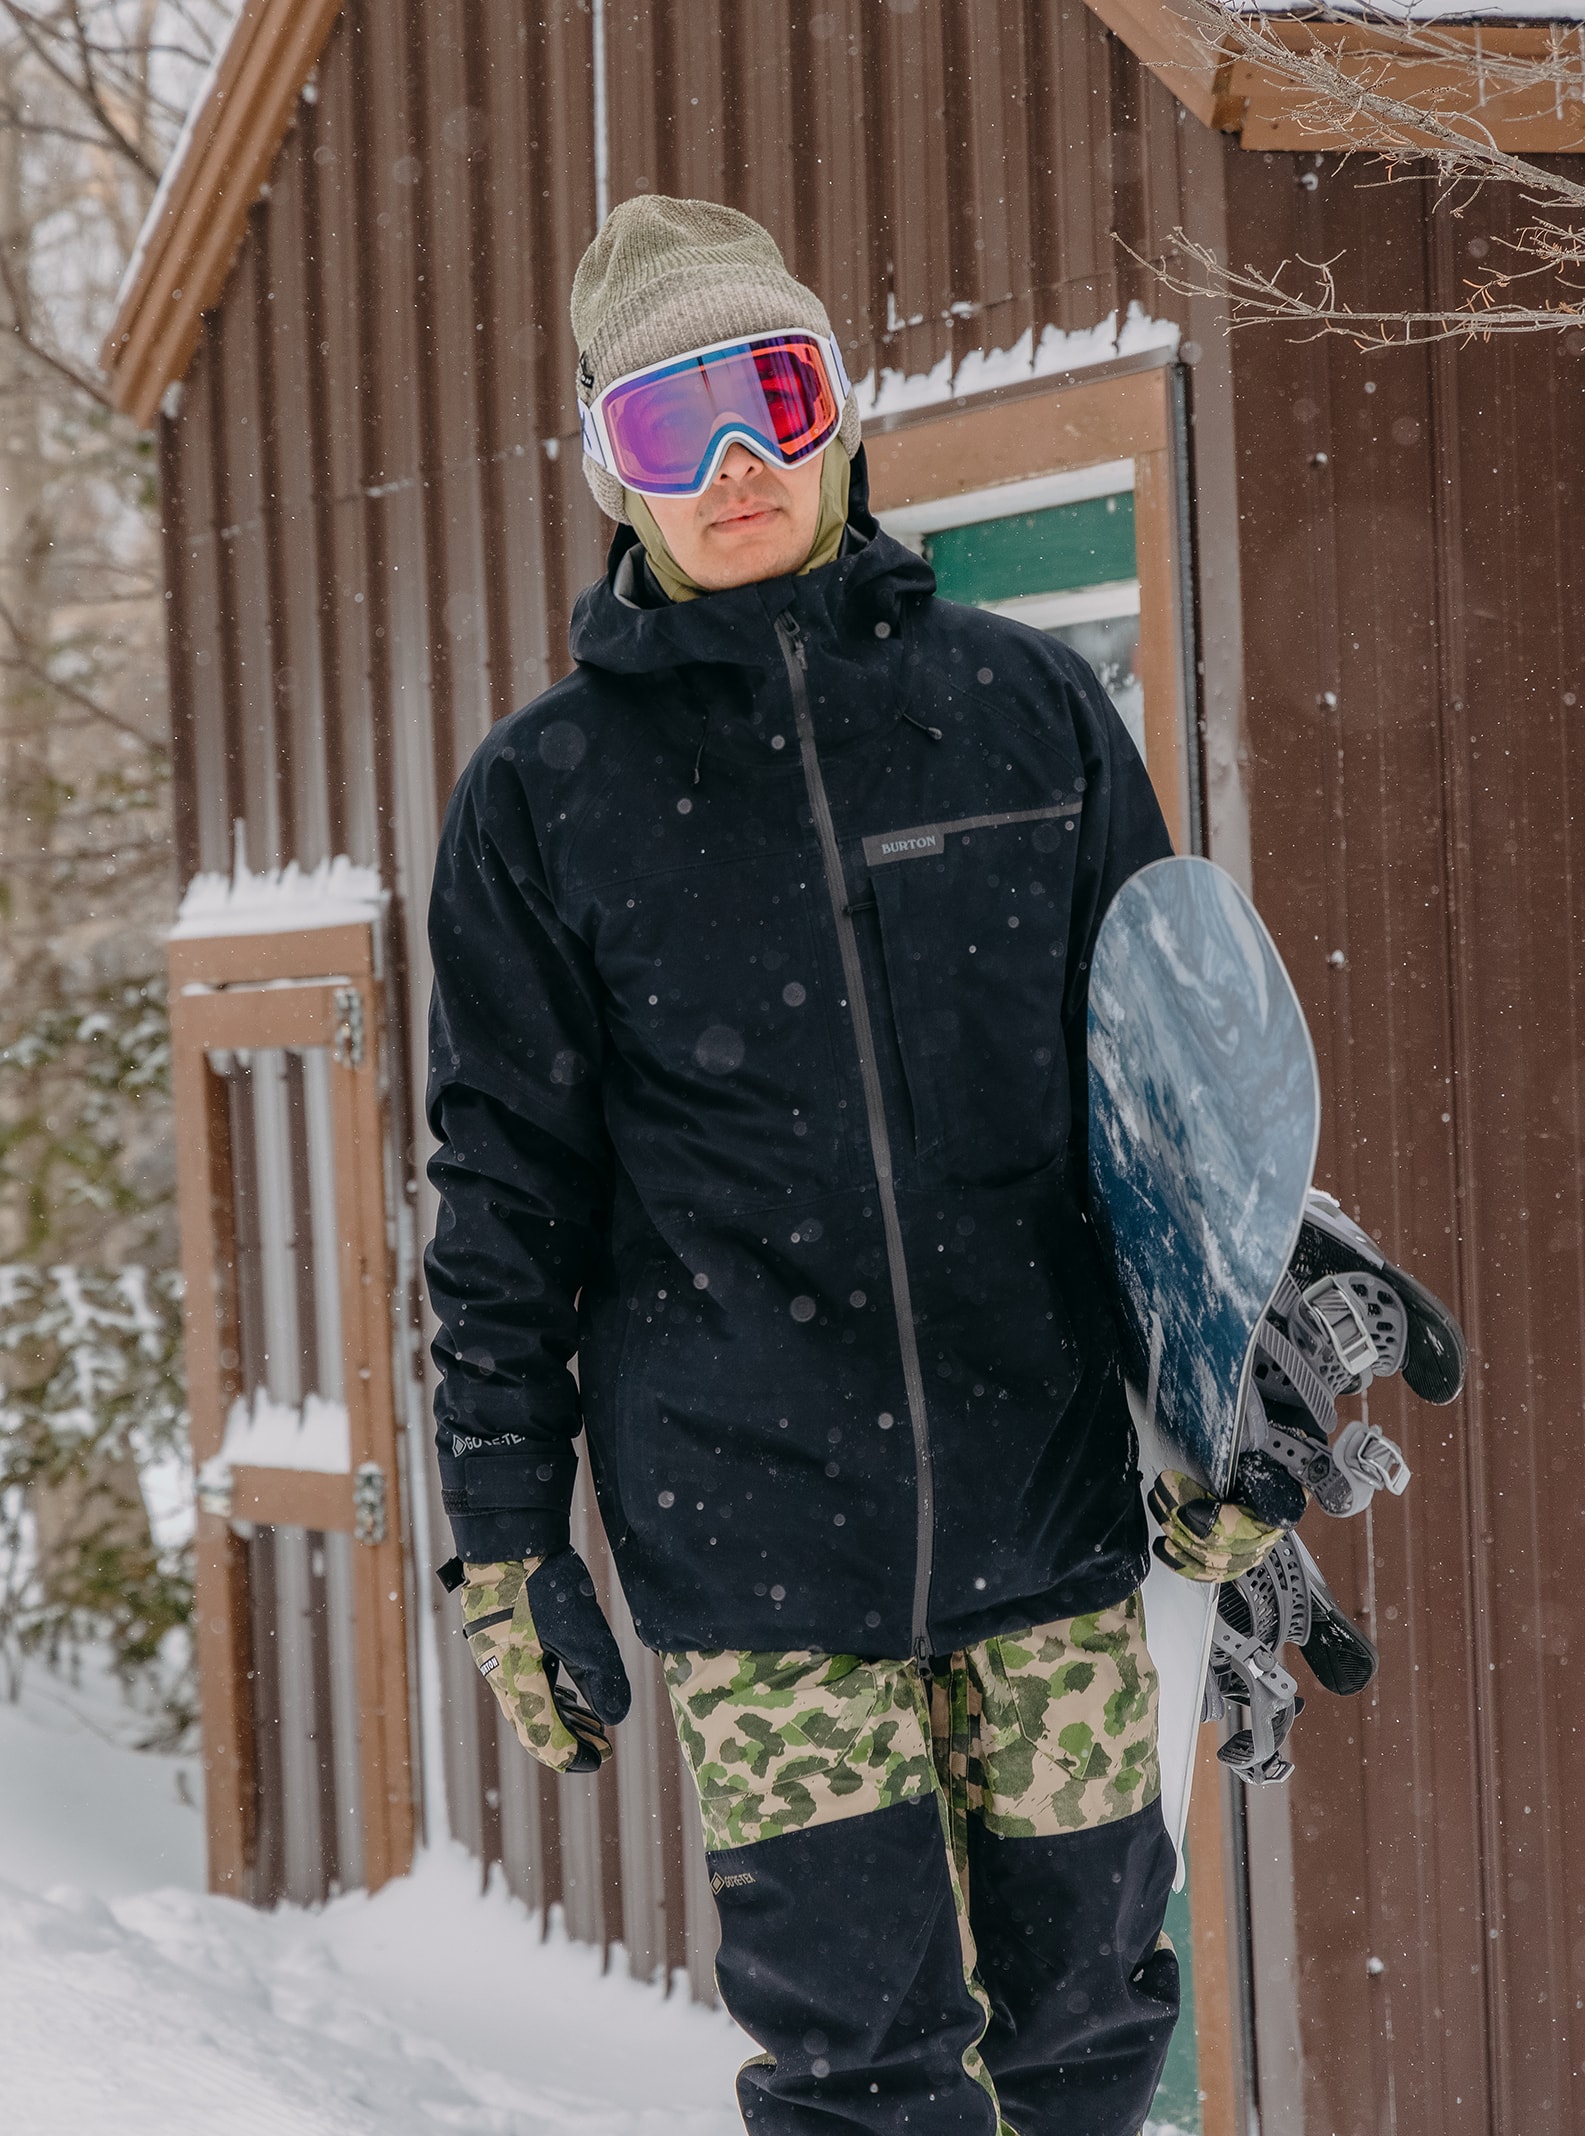 Details about   Ride Hawthorne Men's Snowboard Jacket Ski Jacket Winter Jacket New 